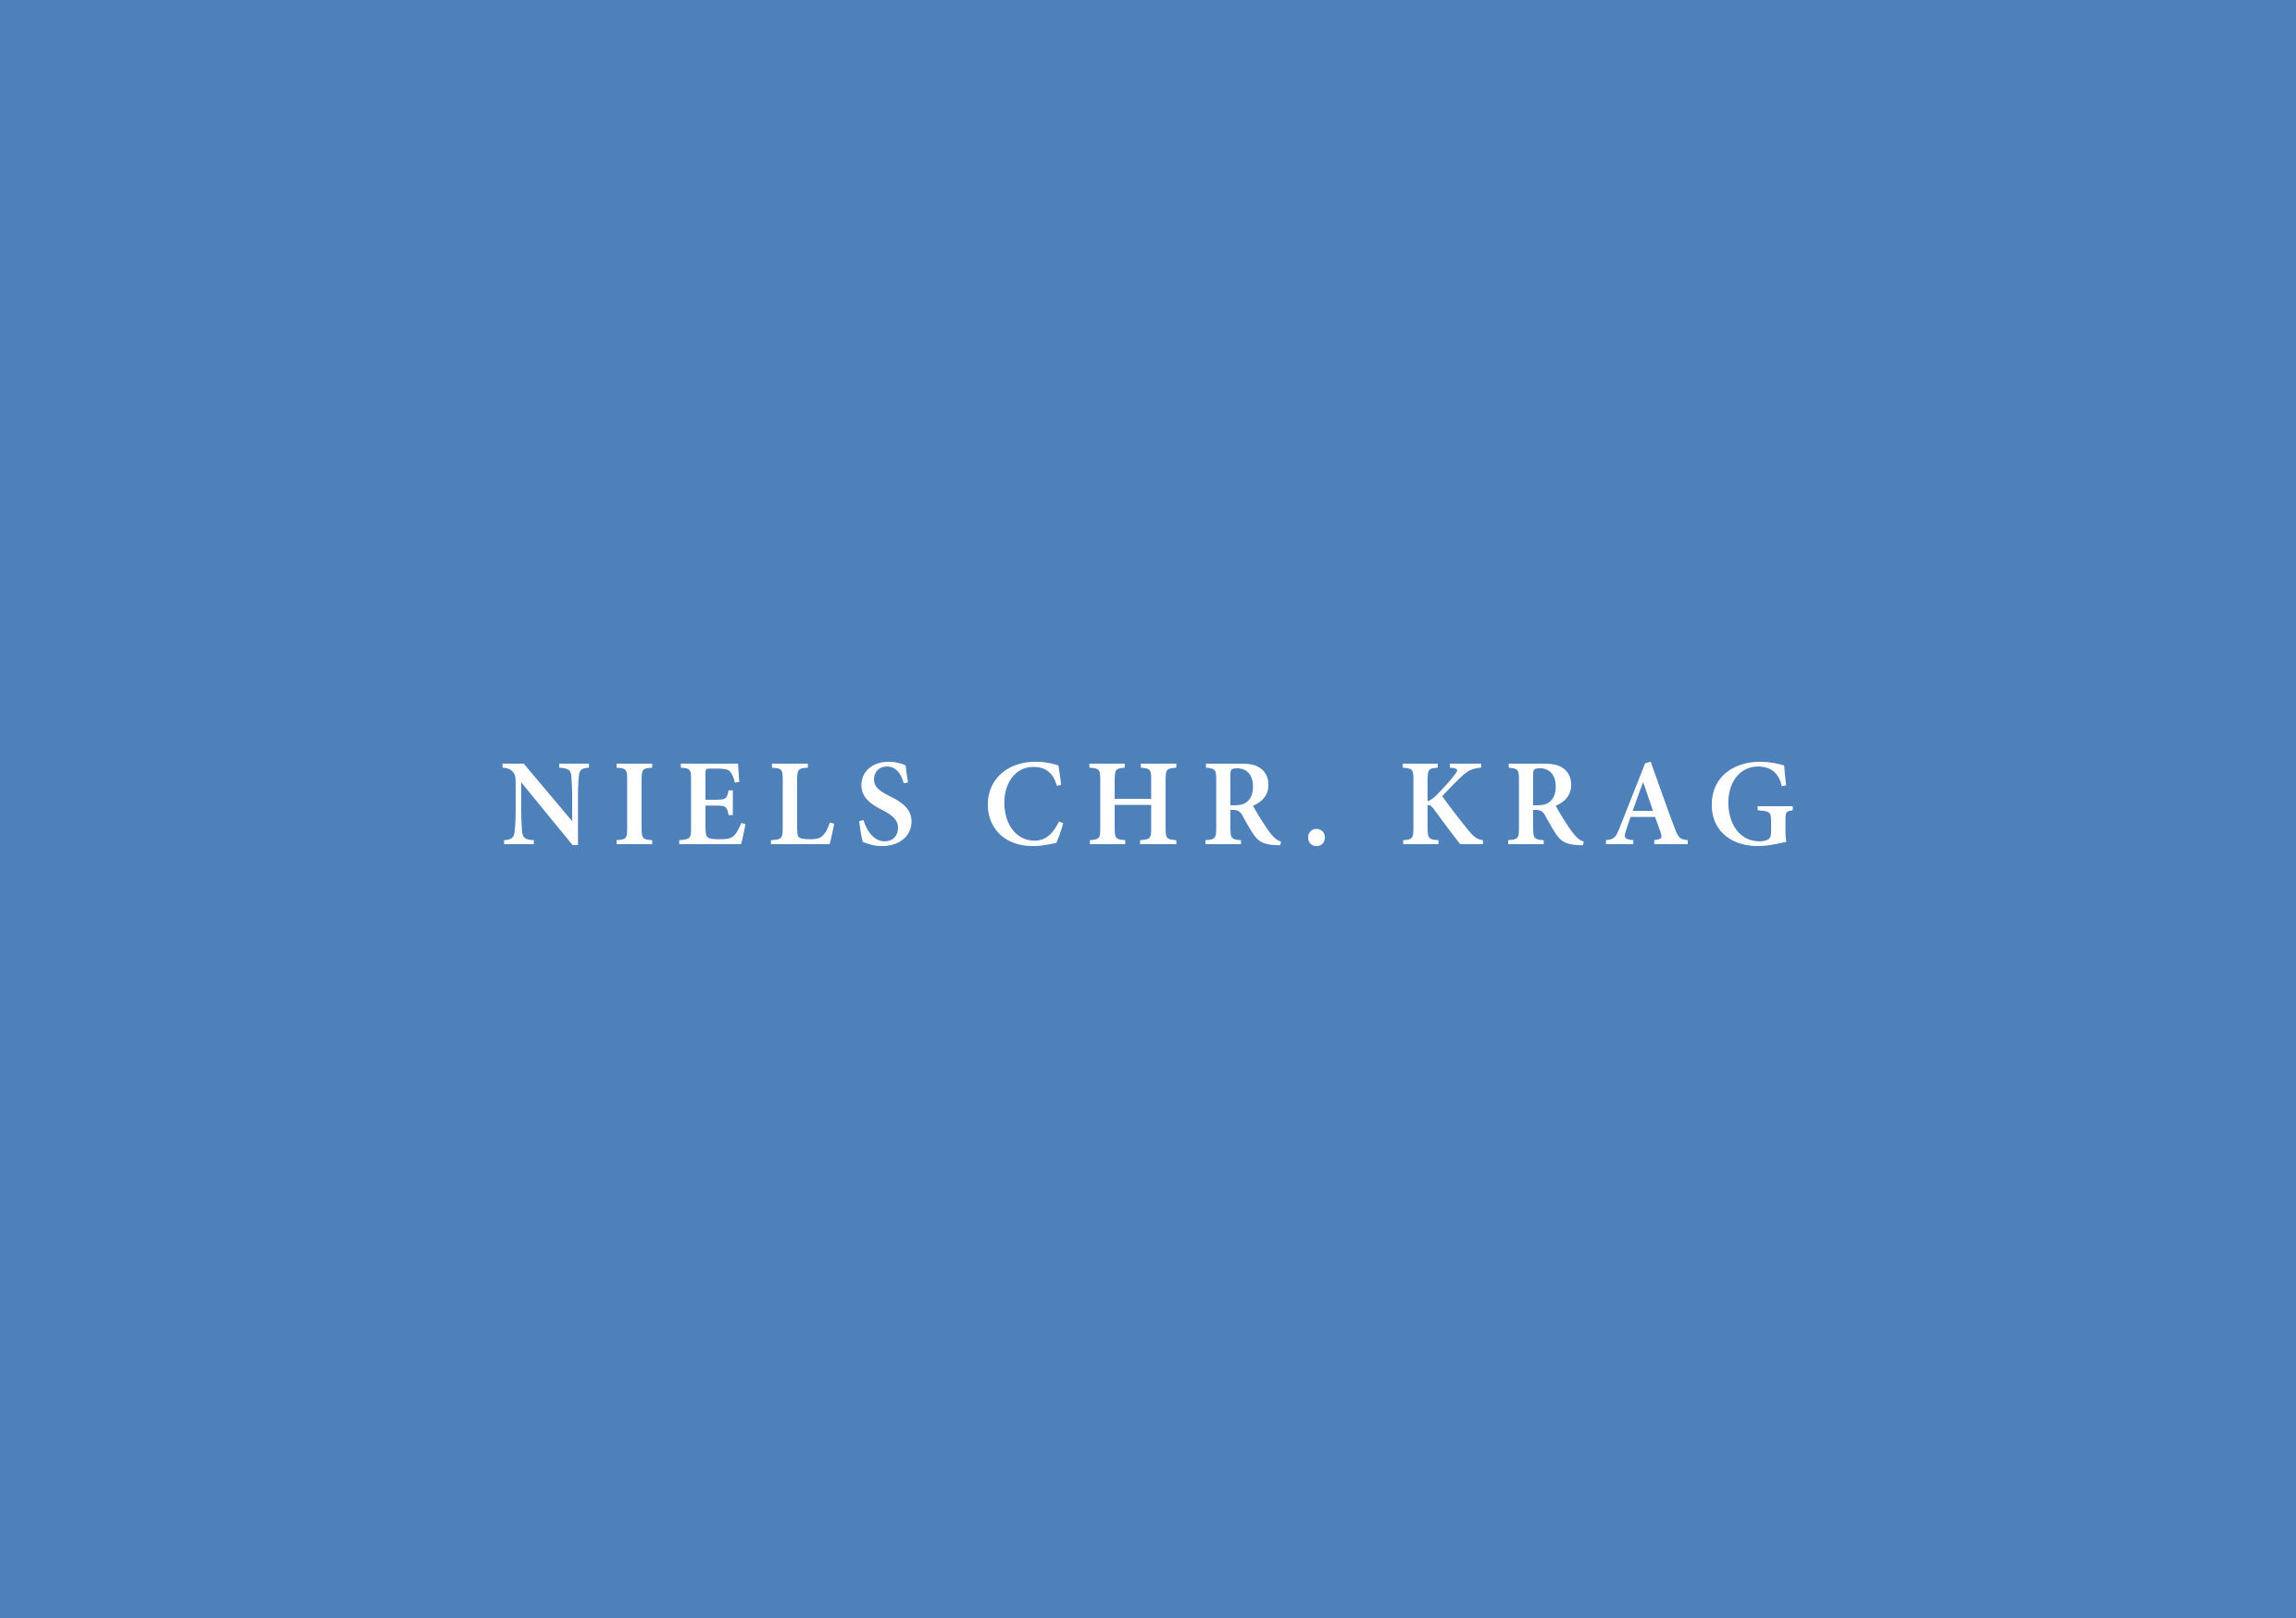 Niels_Chr_Krag_logo.jpg